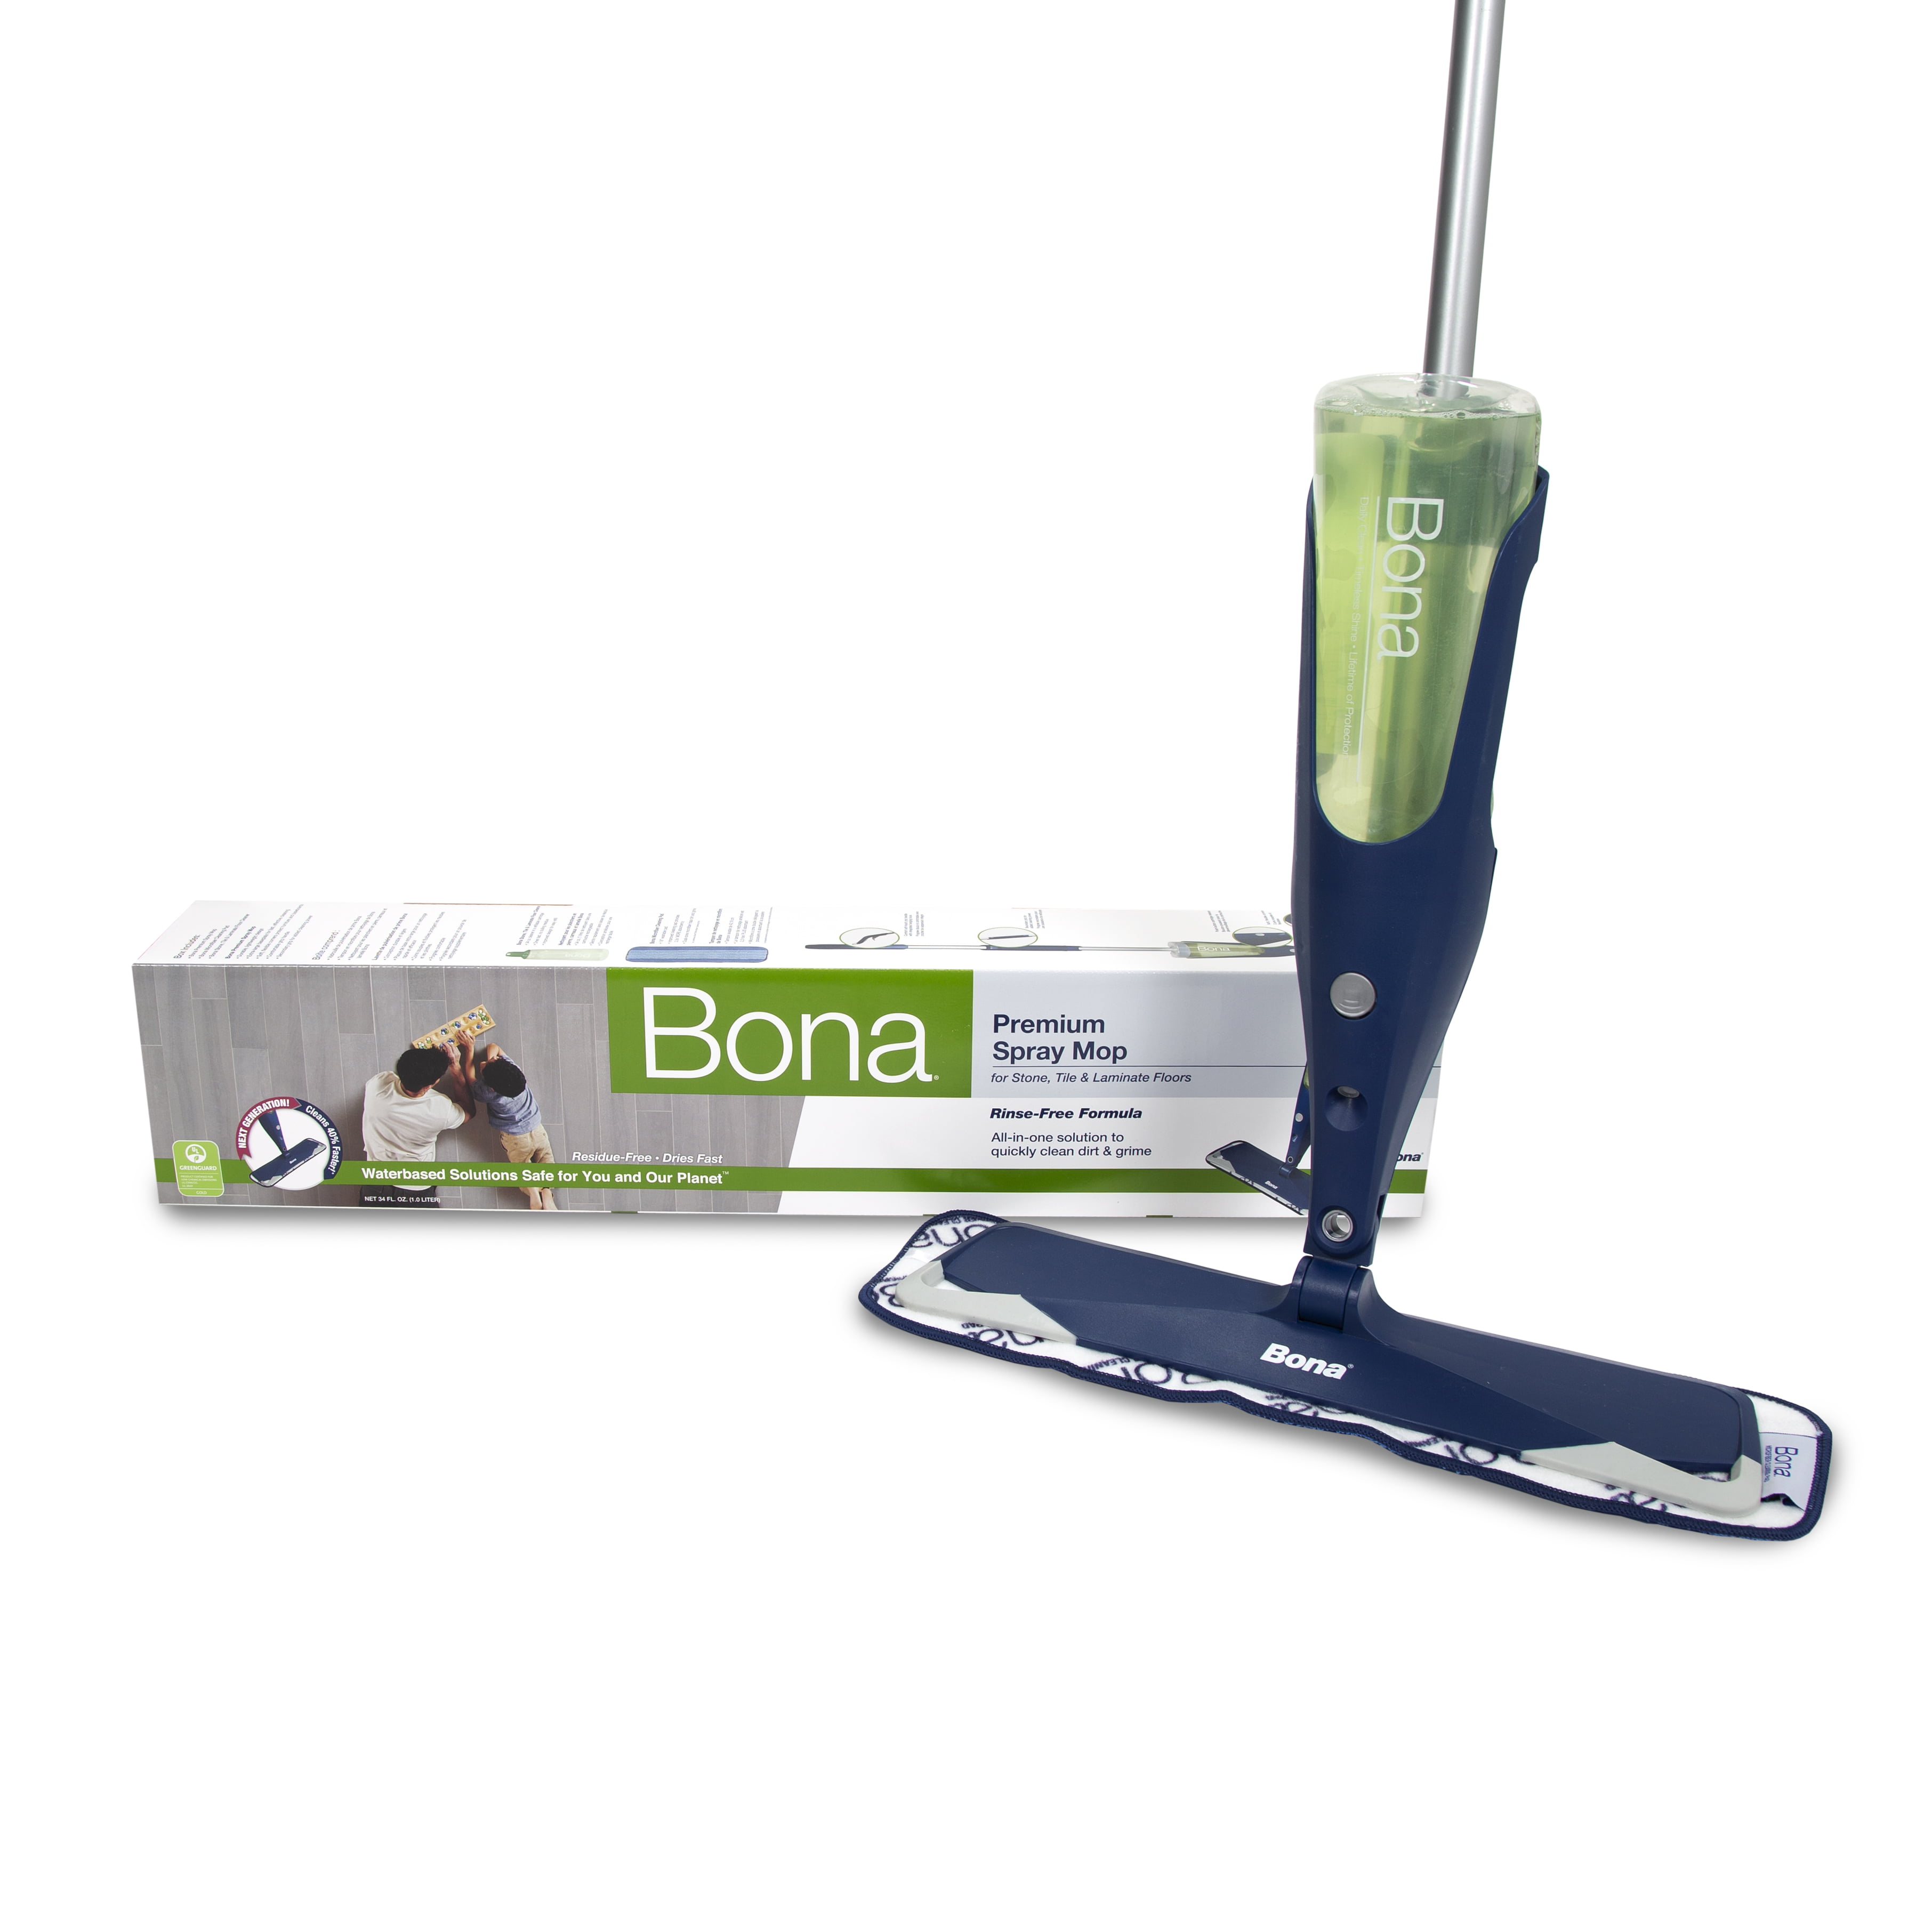 Bona Premium Spray Mop For Hard Surface, Best Spray Mop For Laminate Floors